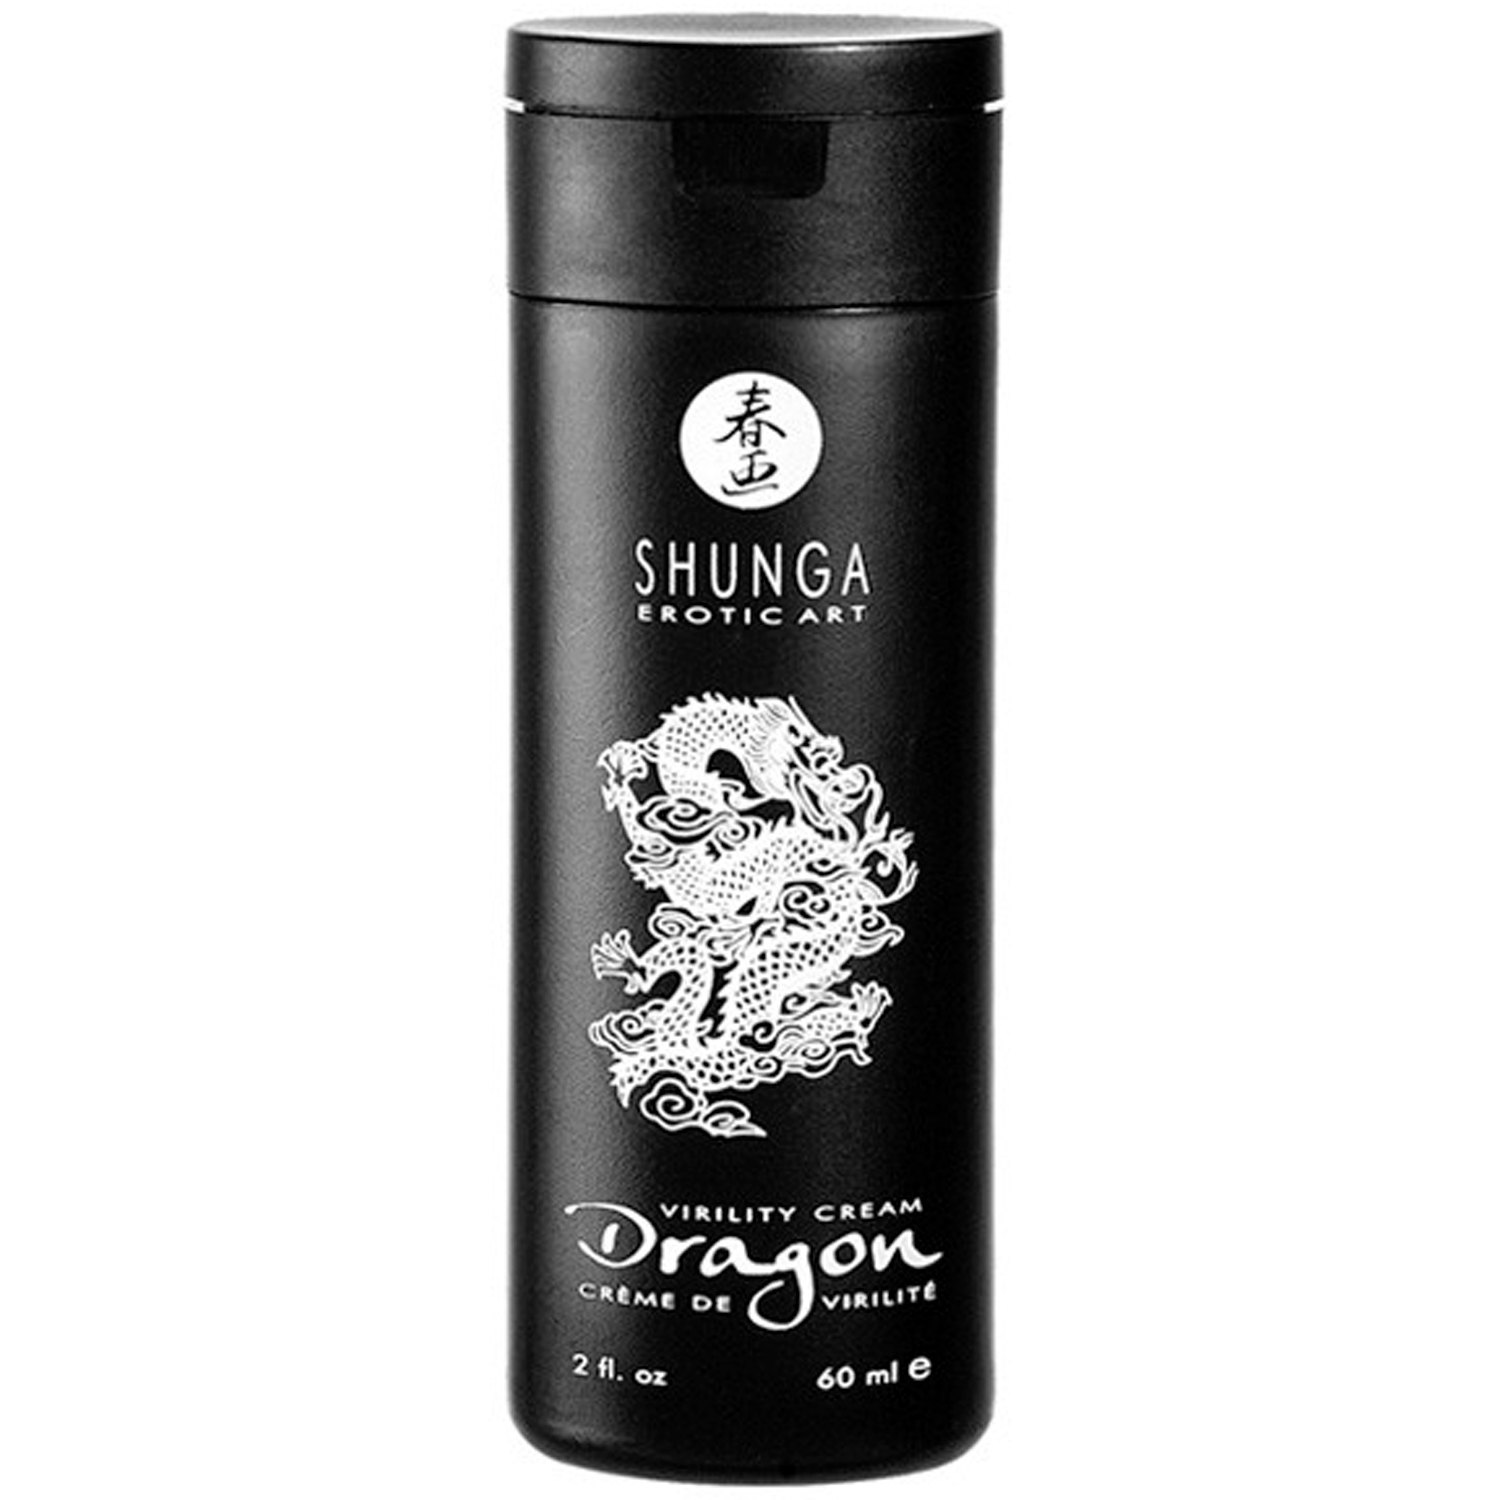 Shunga Dragon Crème Retardatrice Stimulante 60 ml - Transparent